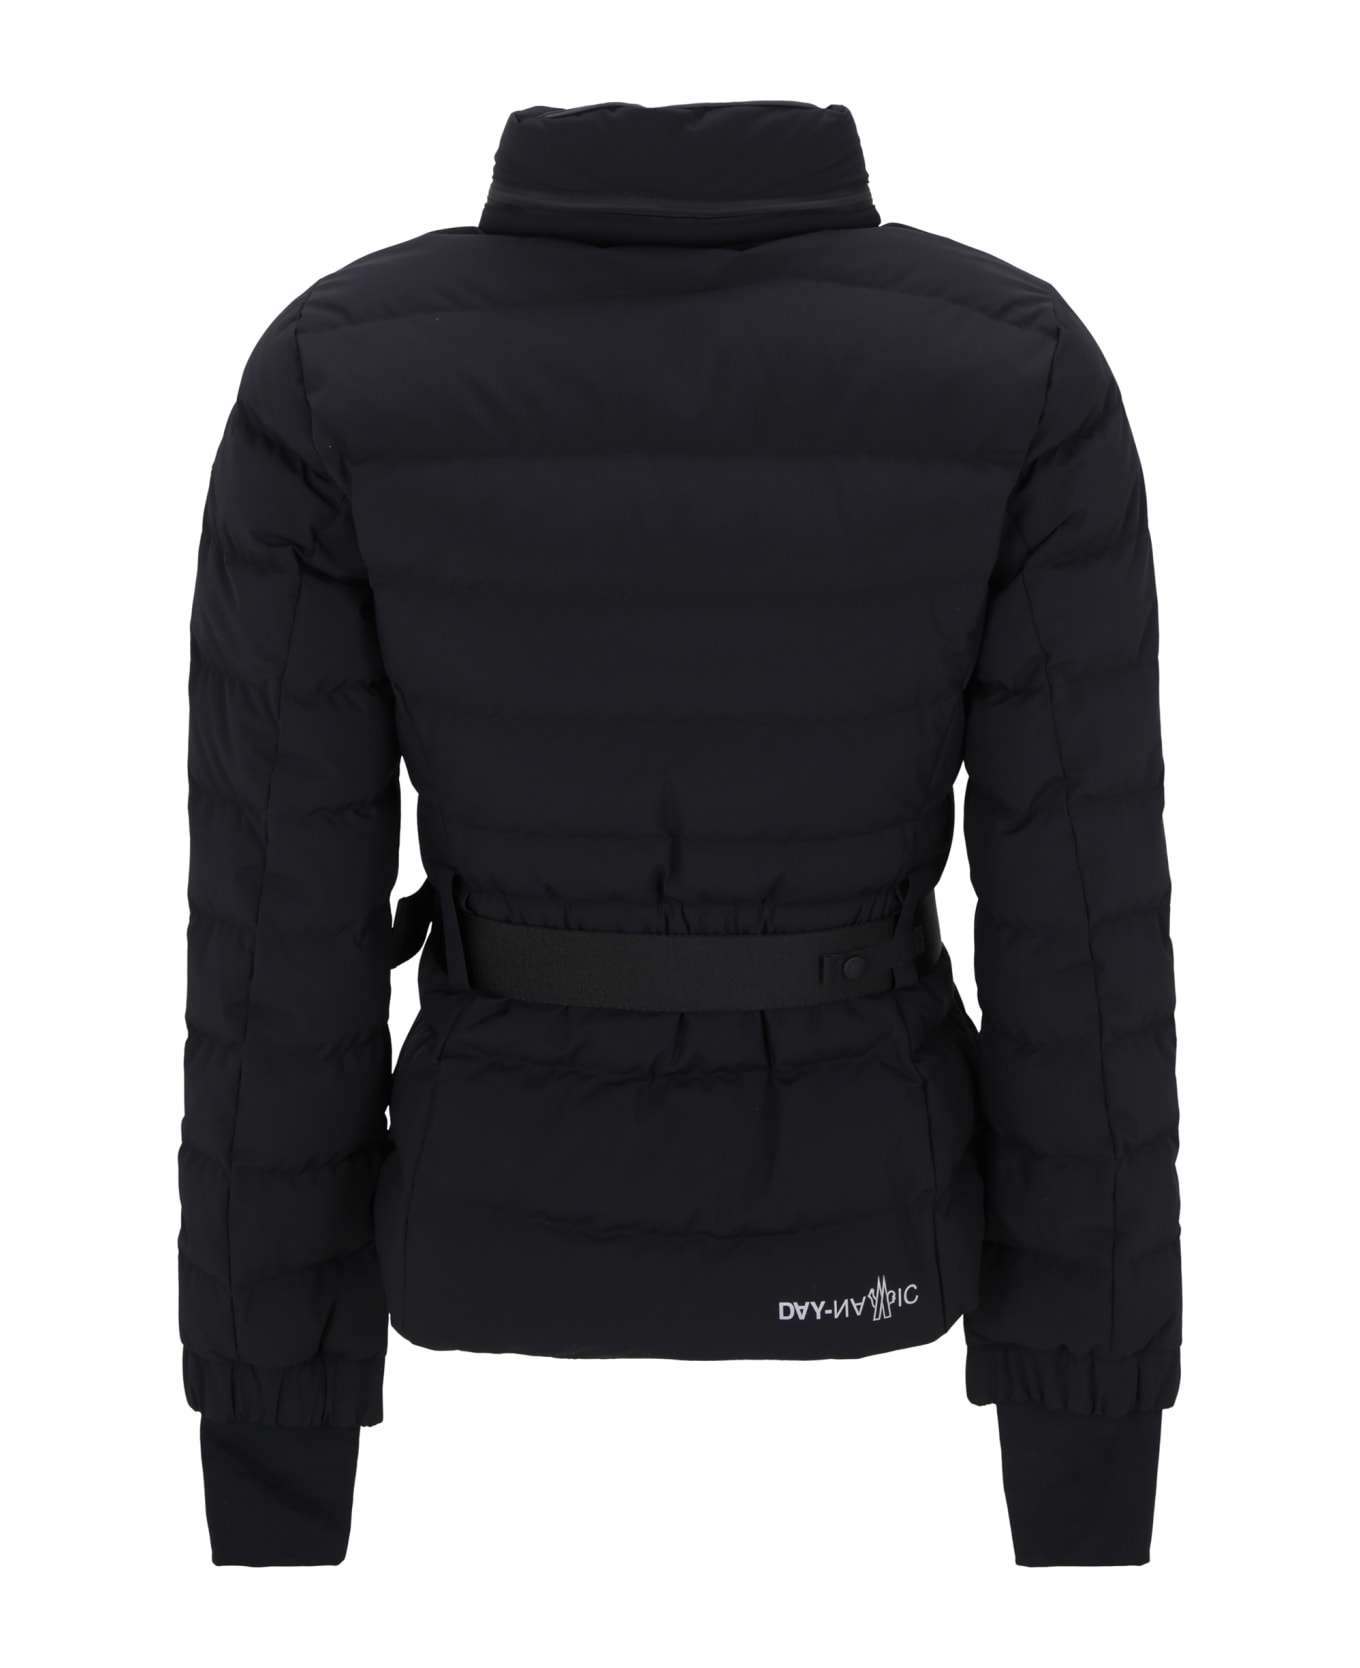 Moncler Grenoble Bettex Down Jacket - Black